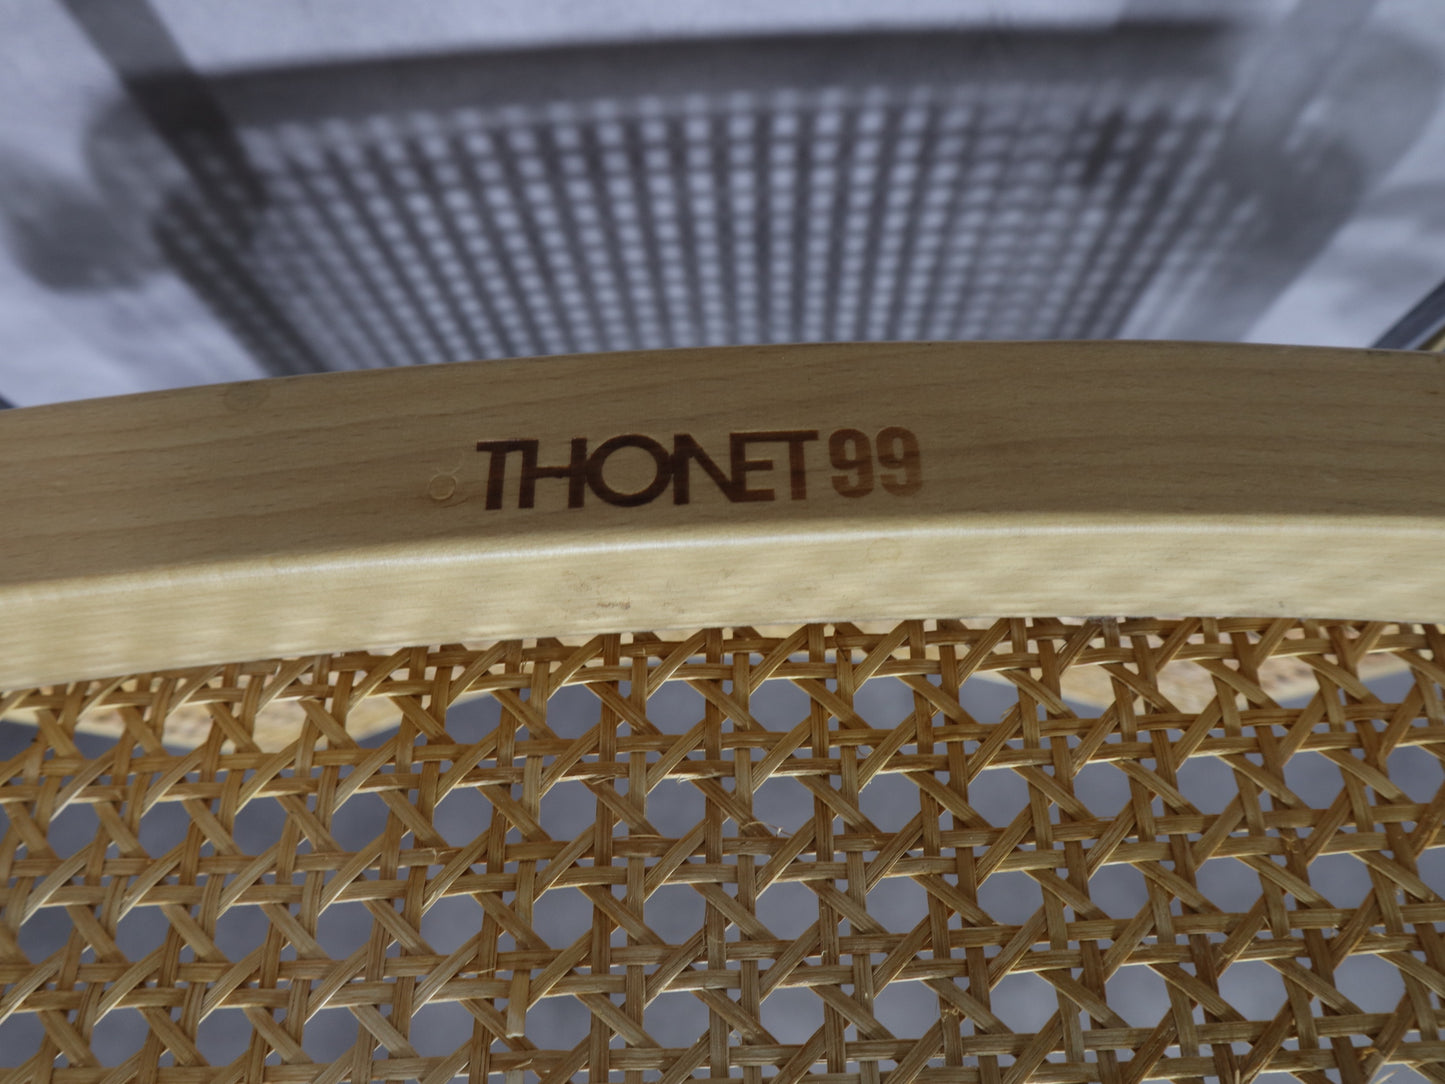 Thonet S64